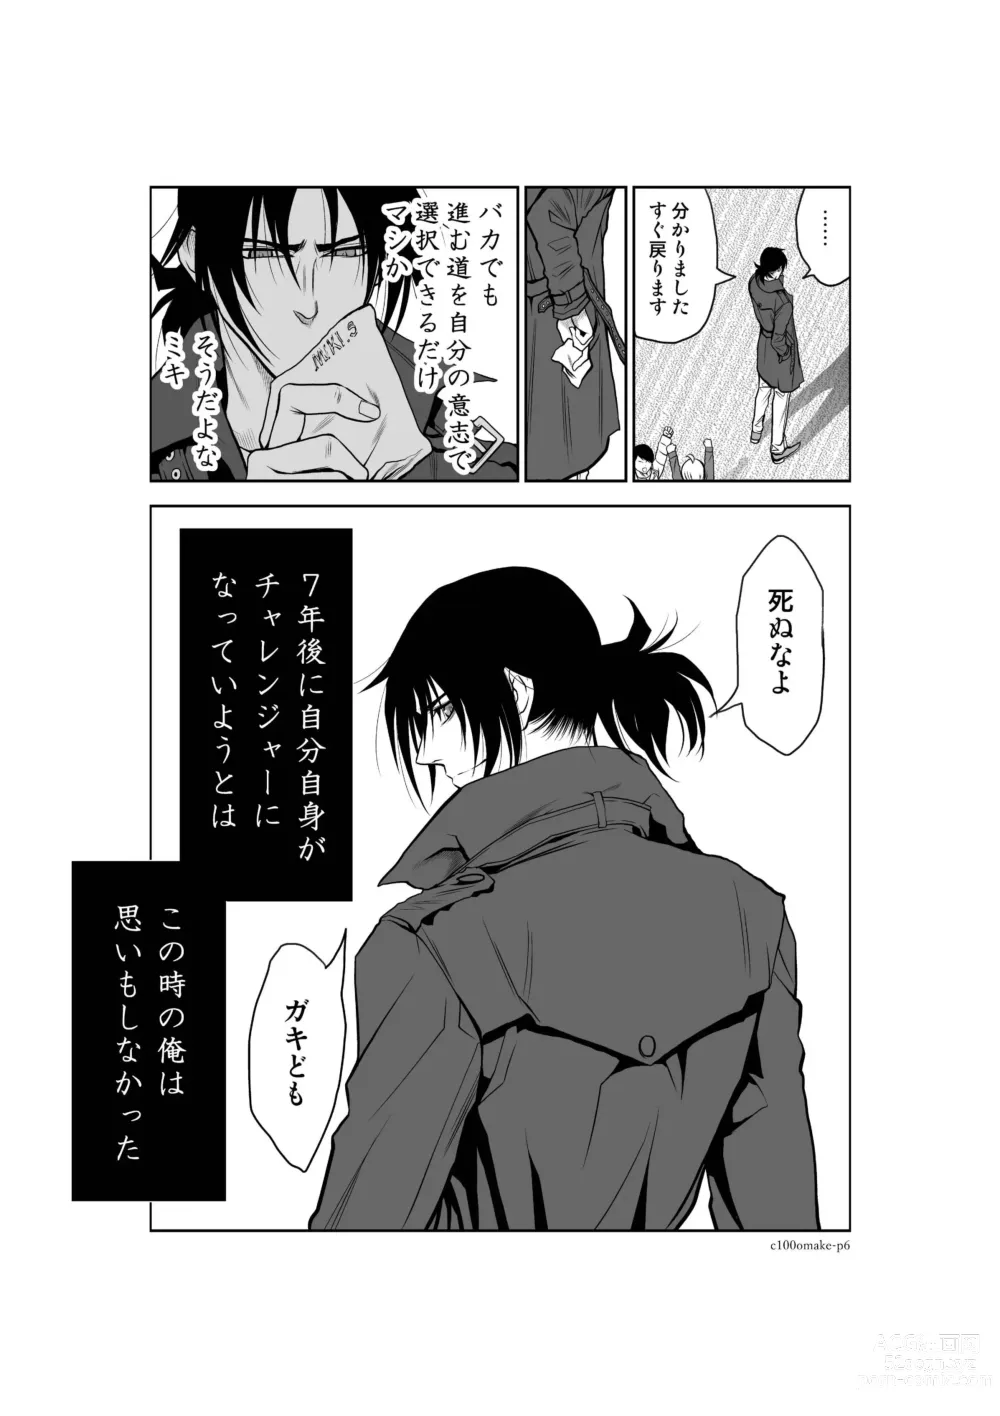 Page 1289 of manga Chijou Hyakkai Ch1-30